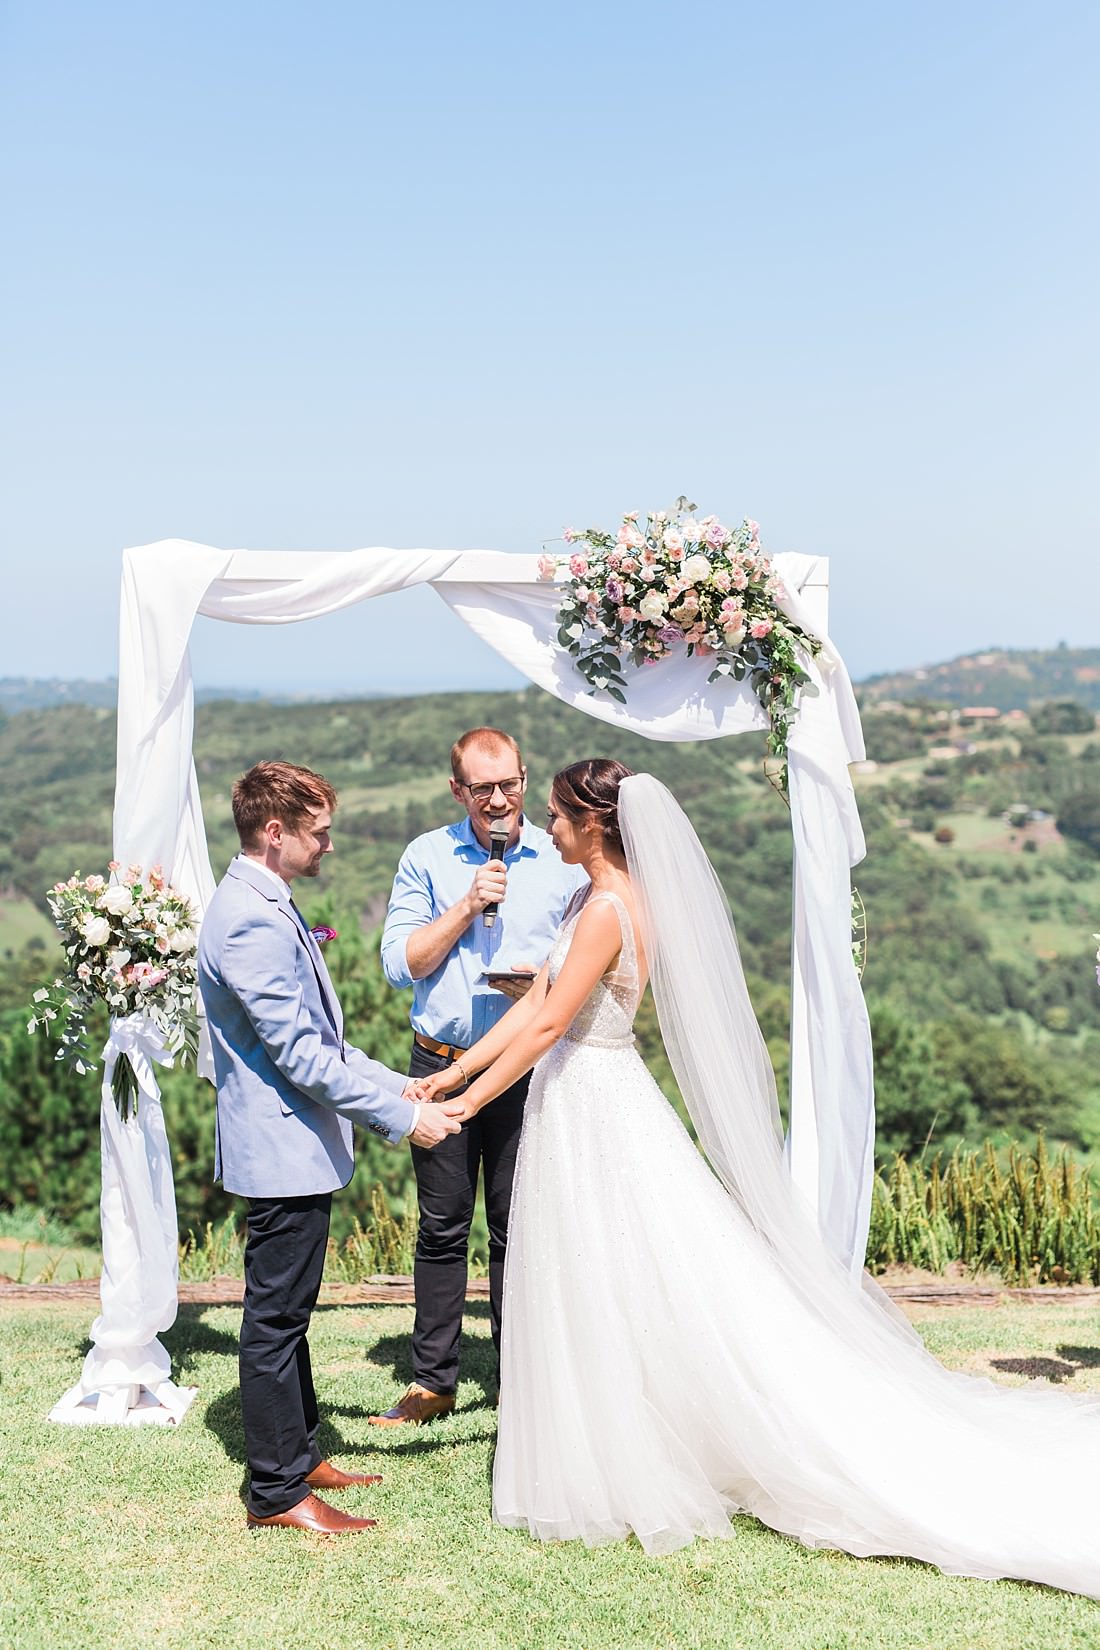 Summergrove Estate Wedding by Mario Colli Photography